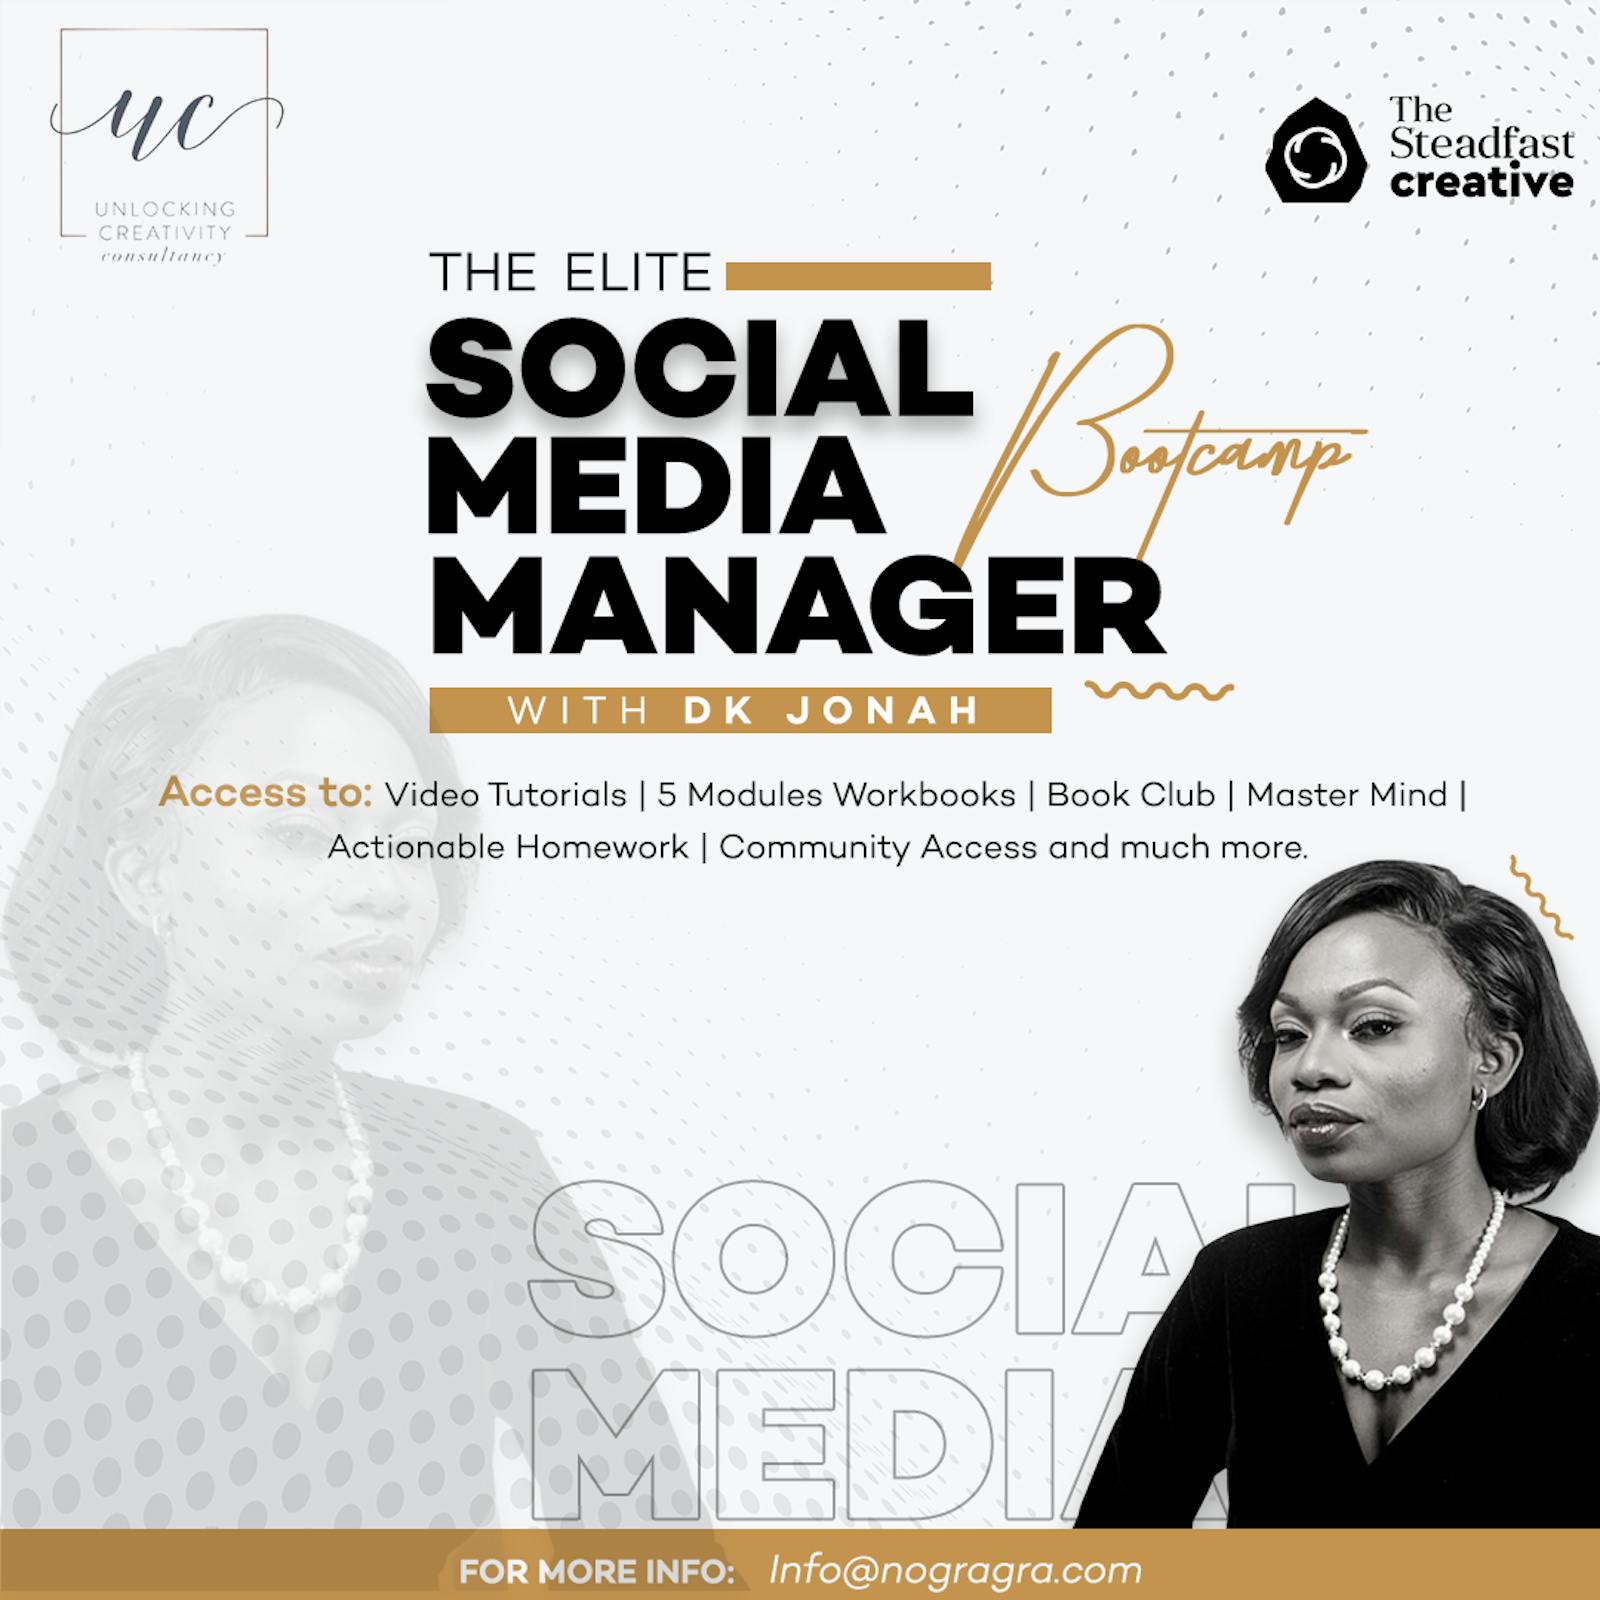 The Elite Social Media Manager